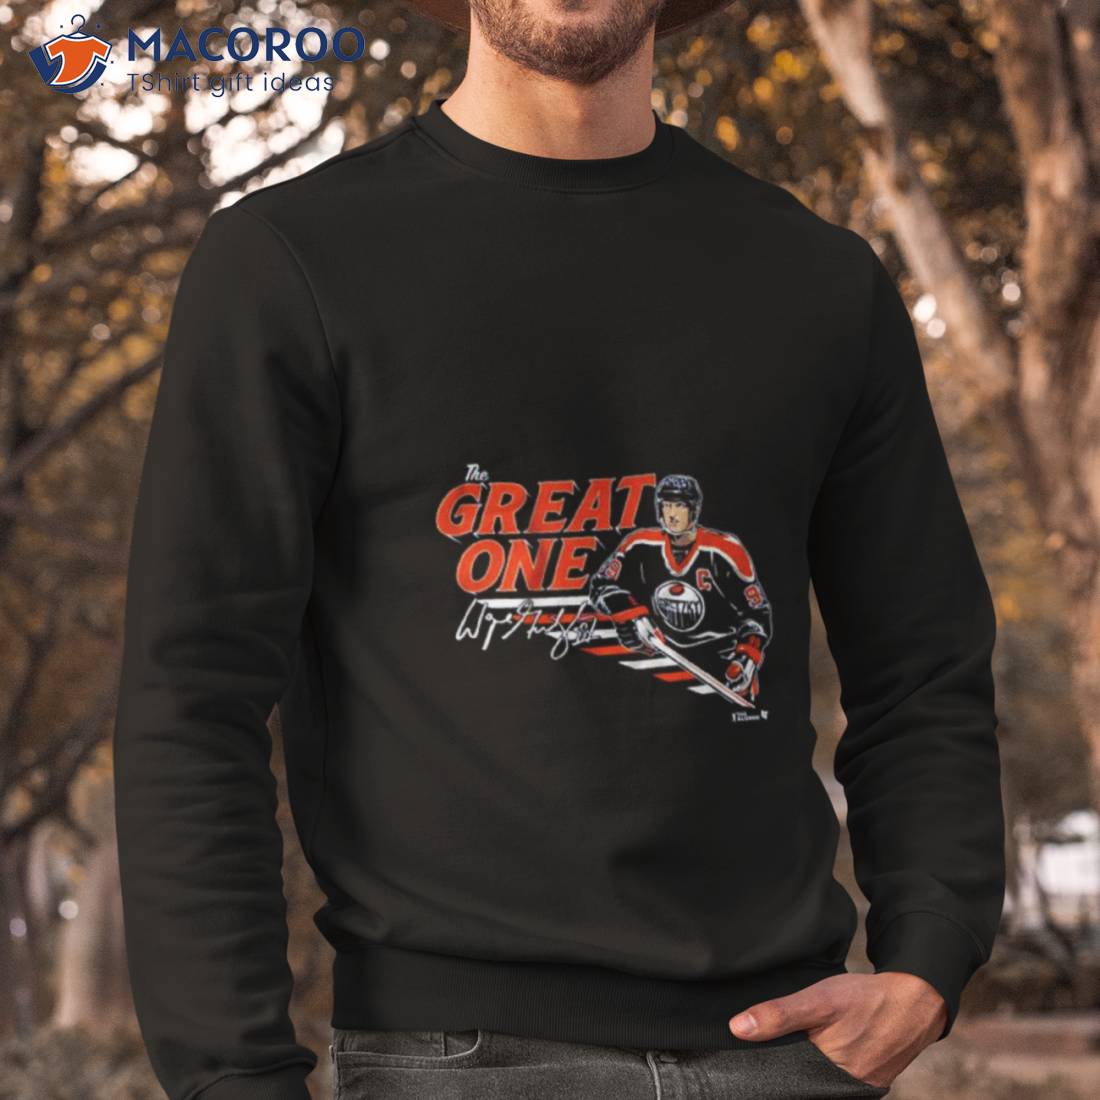 Wayne Gretzky Kids T-Shirt